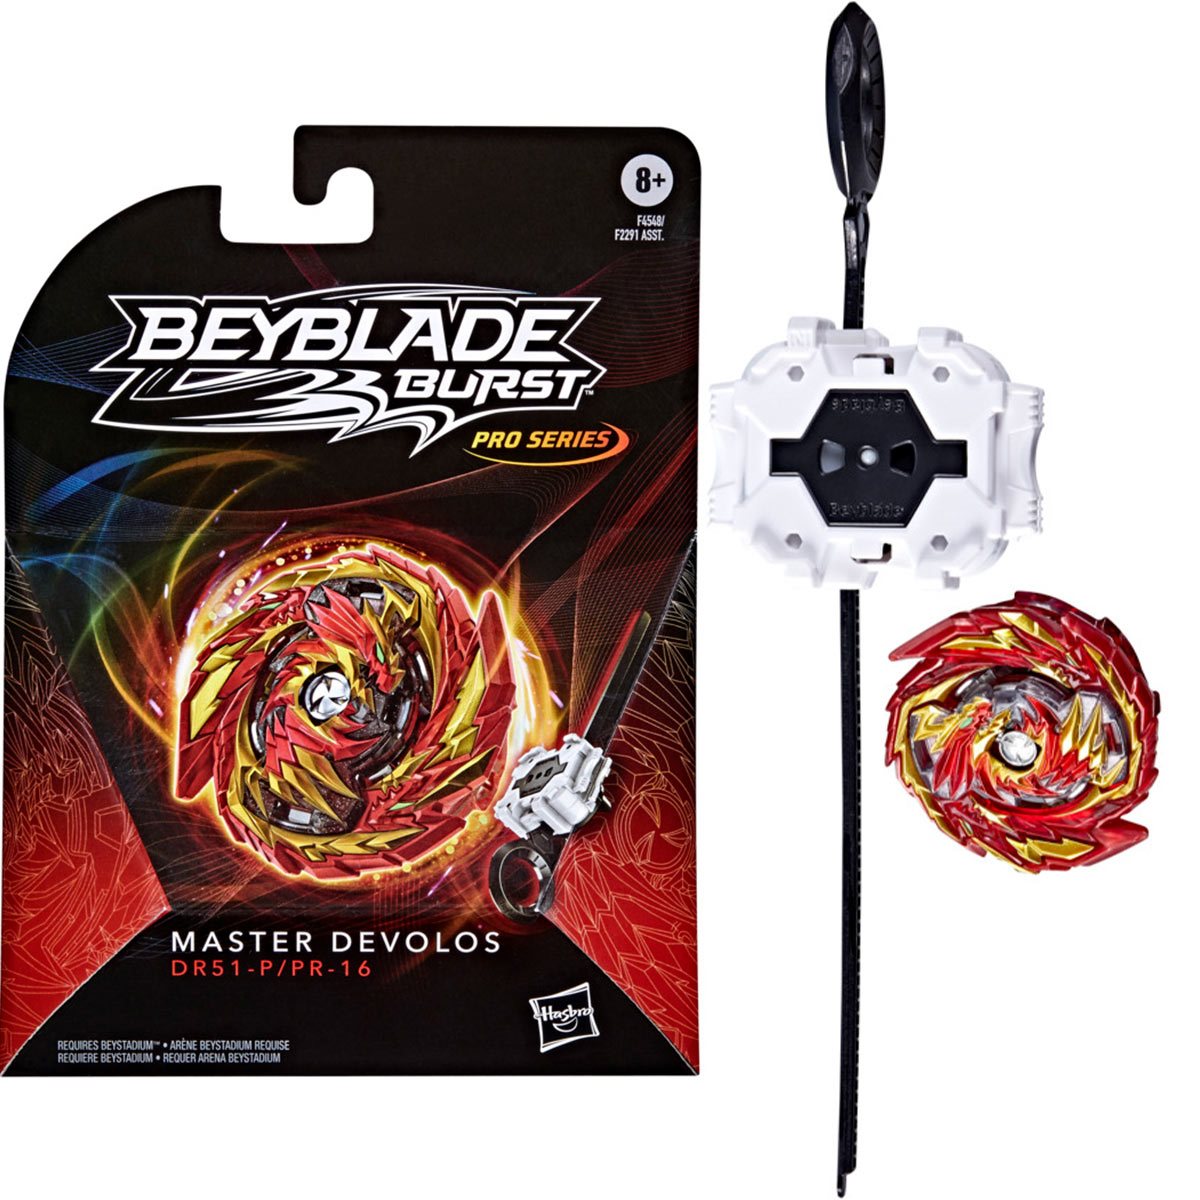 BEYBLADE Burst Pro Series Brave Valtryek Spinning Top Starter Pack, Attack  Type Battling Game Top, Toy for Kids Ages 8 and Up